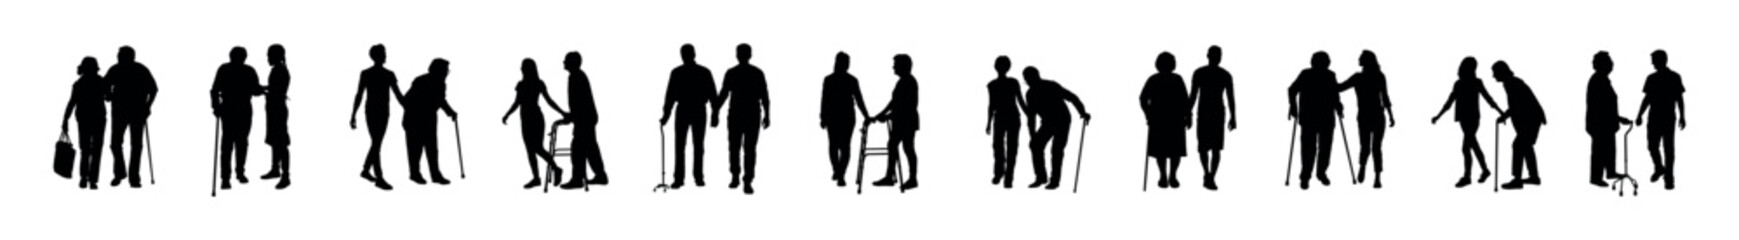 Caregiver helping senior people walking using walking aid silhouette set collection.